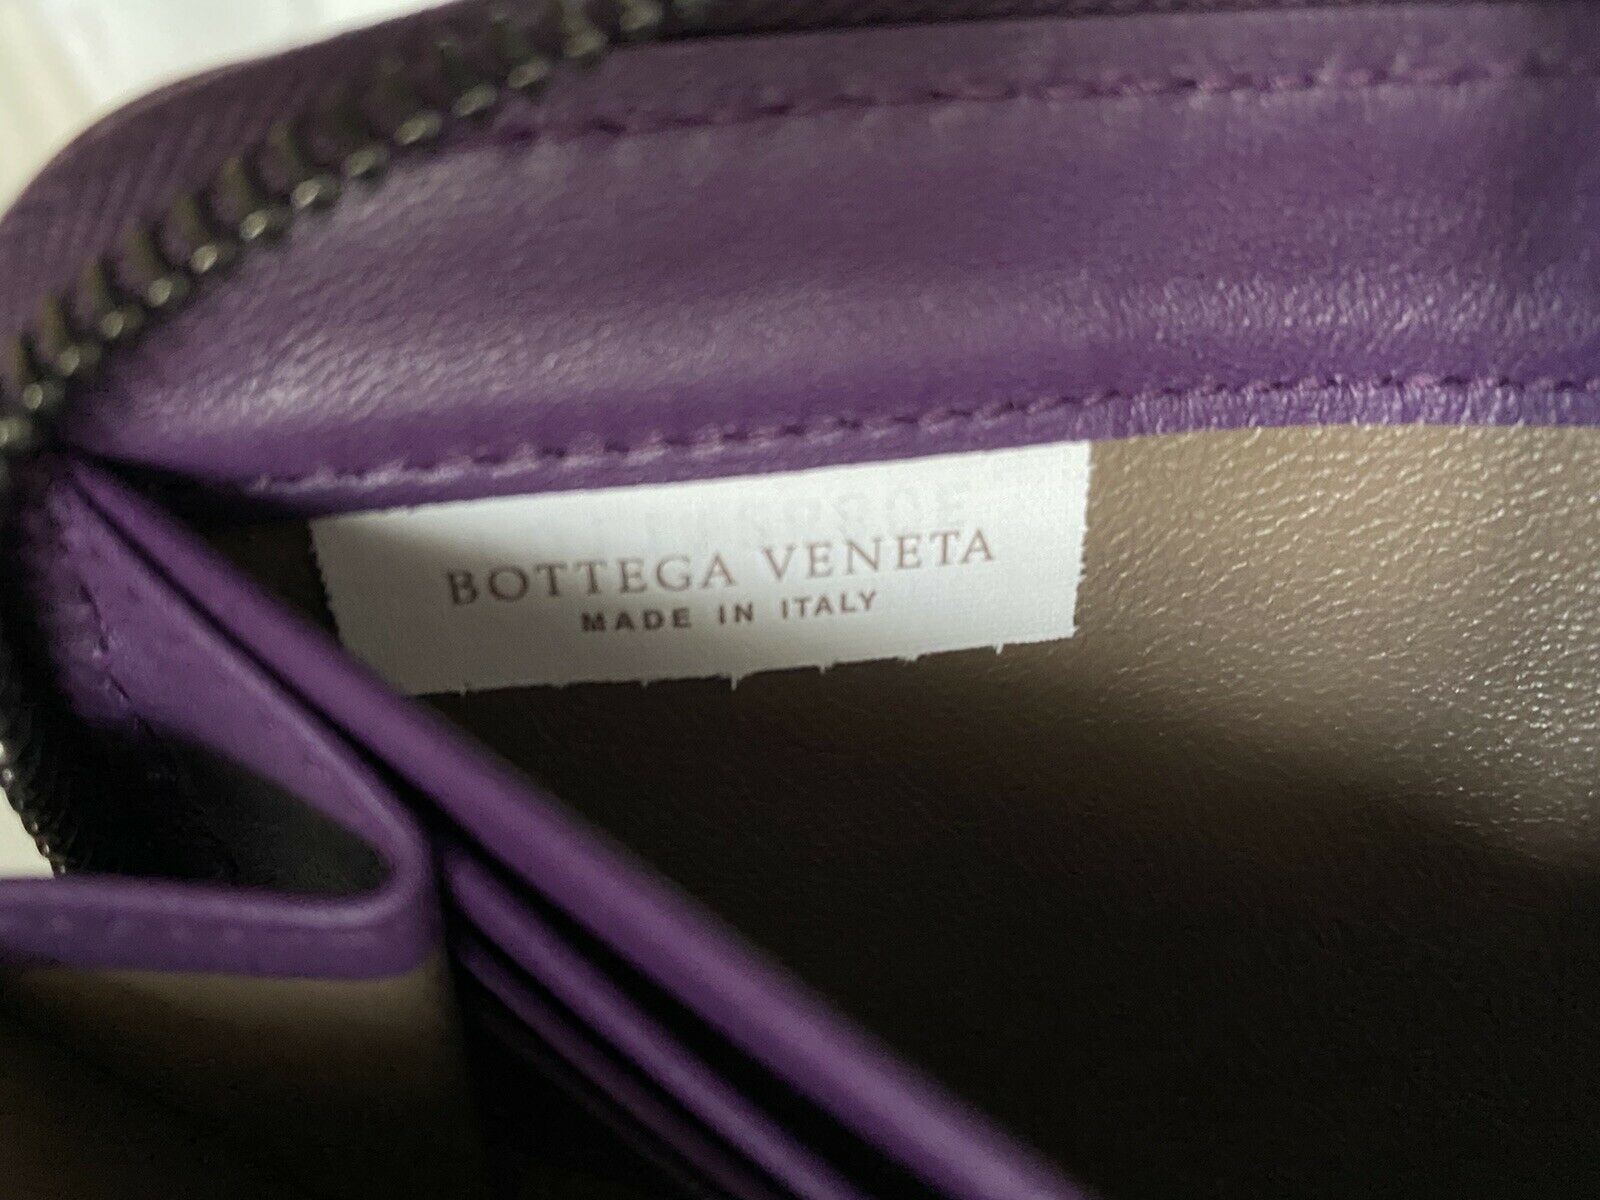 NWT Bottega Veneta Intrecciato Кошелек из кожи наппа на молнии Monalisa 518389 IT 